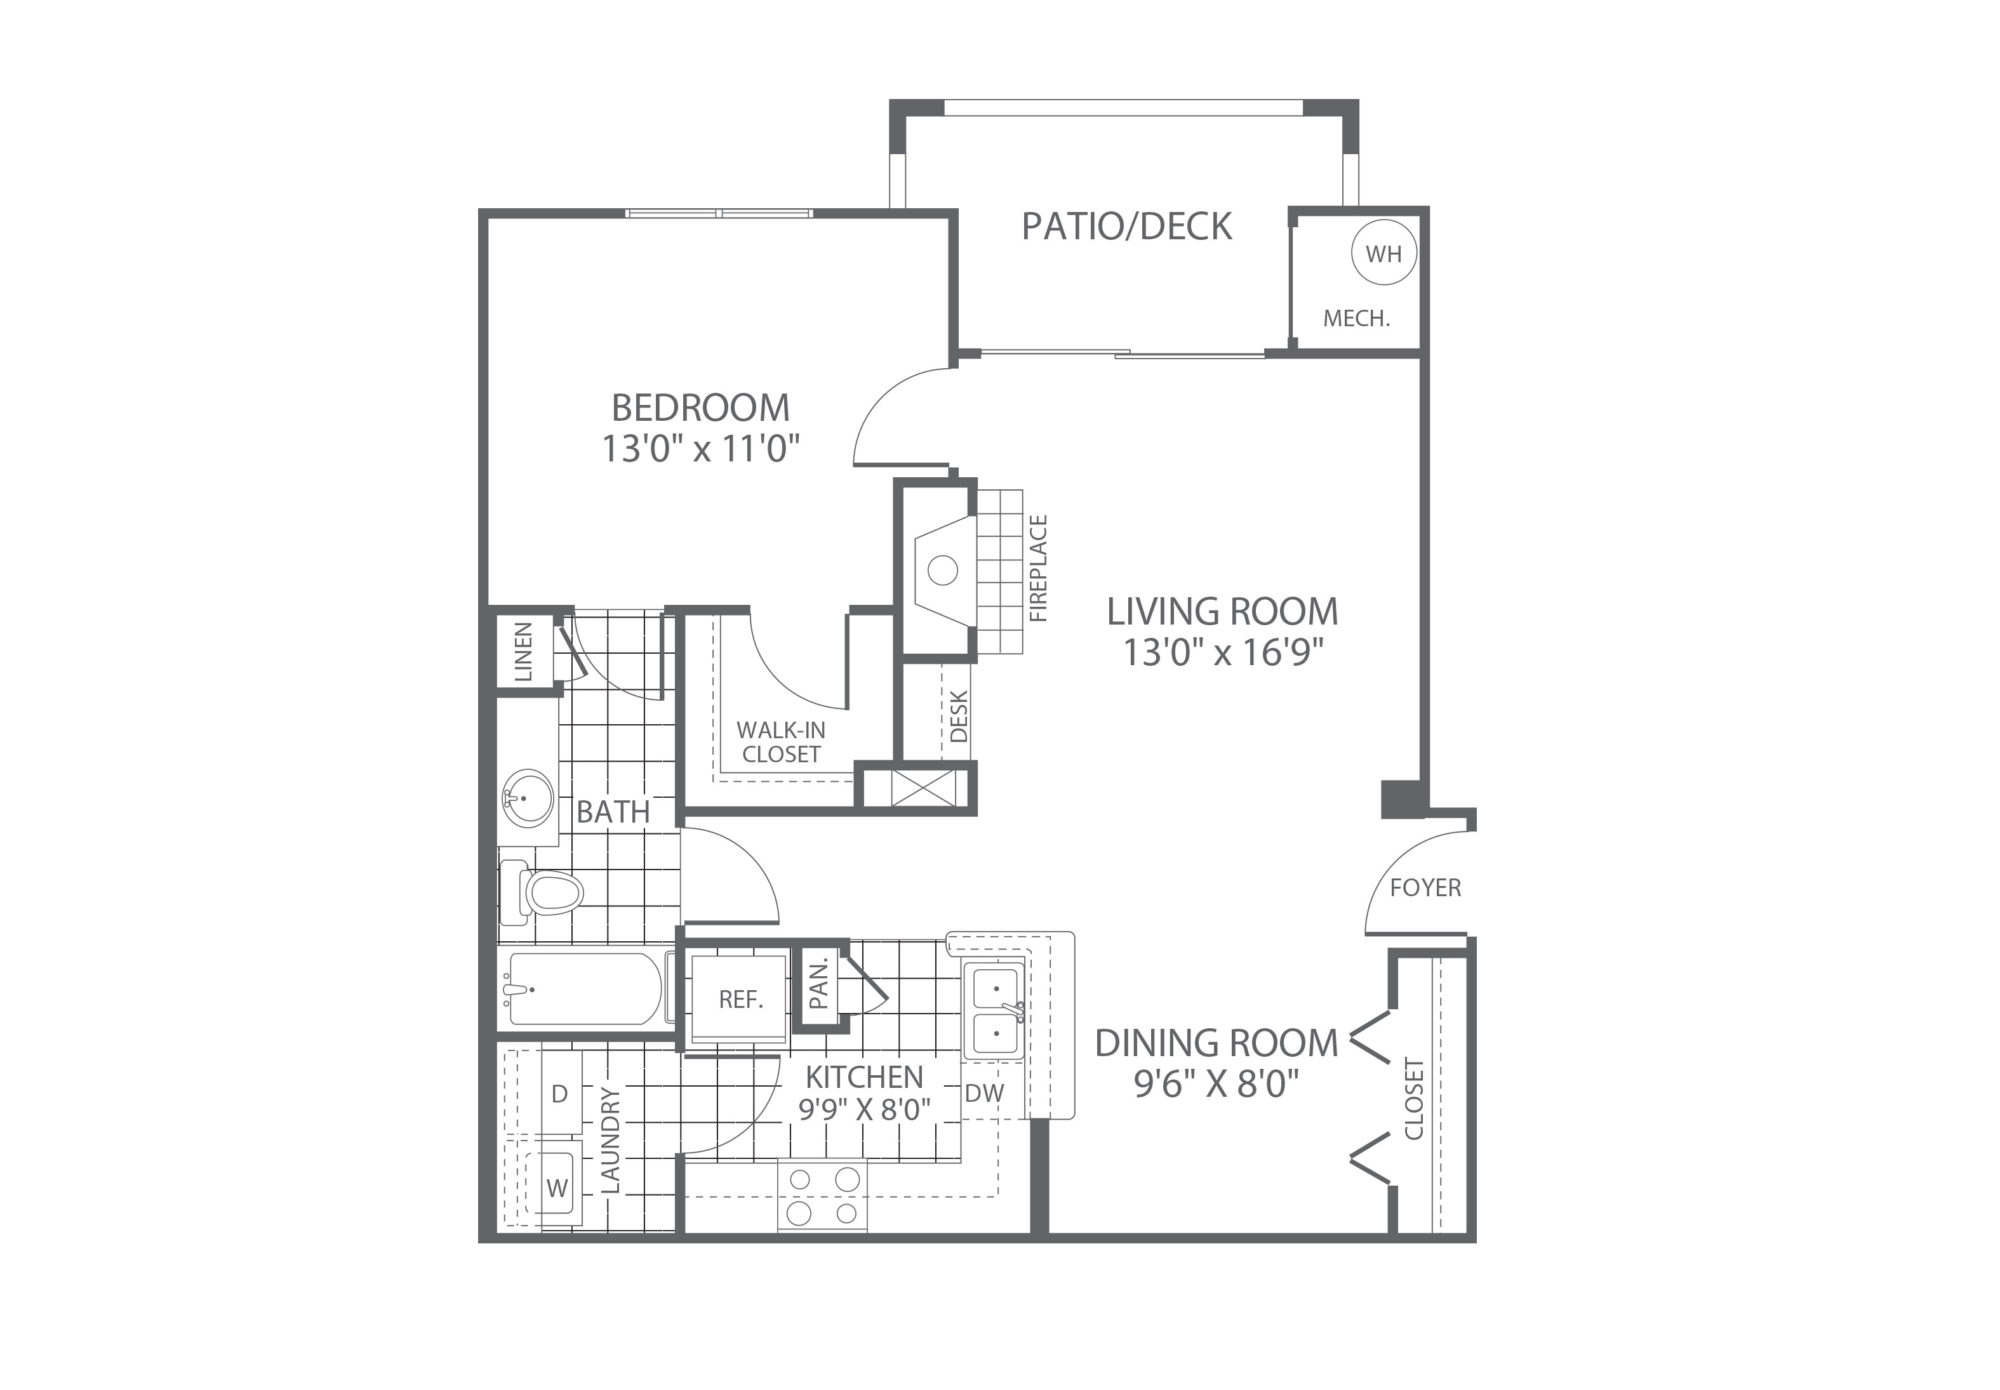 1-bedroom apartment in Yardley, PA with 780 sq. ft. at Edge at Yardley